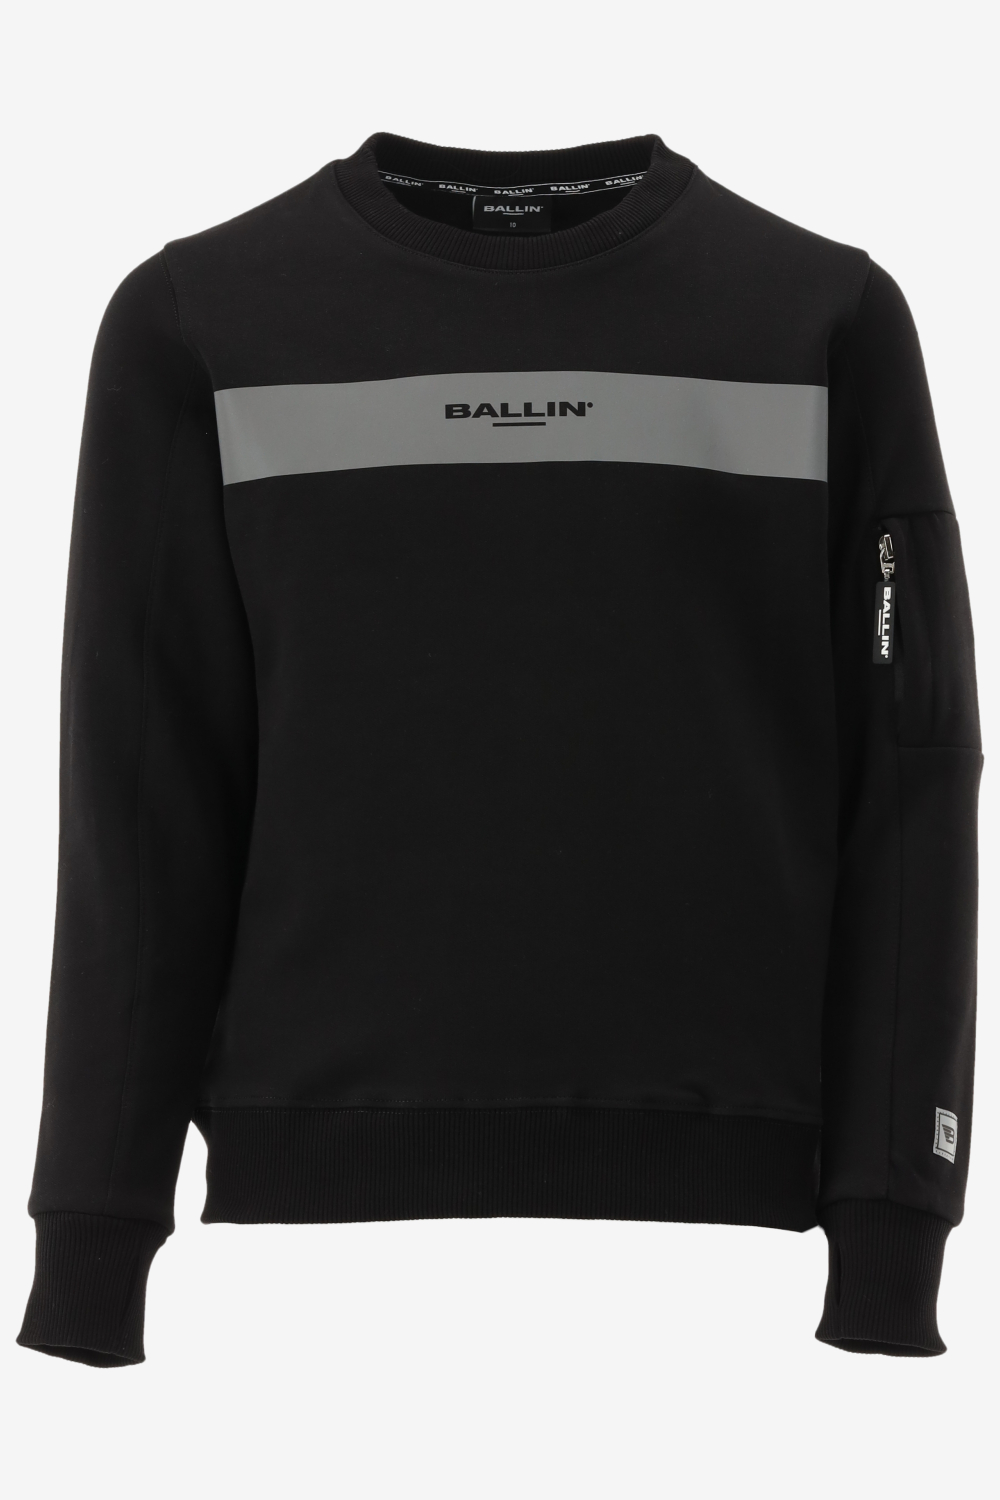 Ballin Amsterdam -  Jongens Regular Fit   Sweater  - Zwart - Maat 176